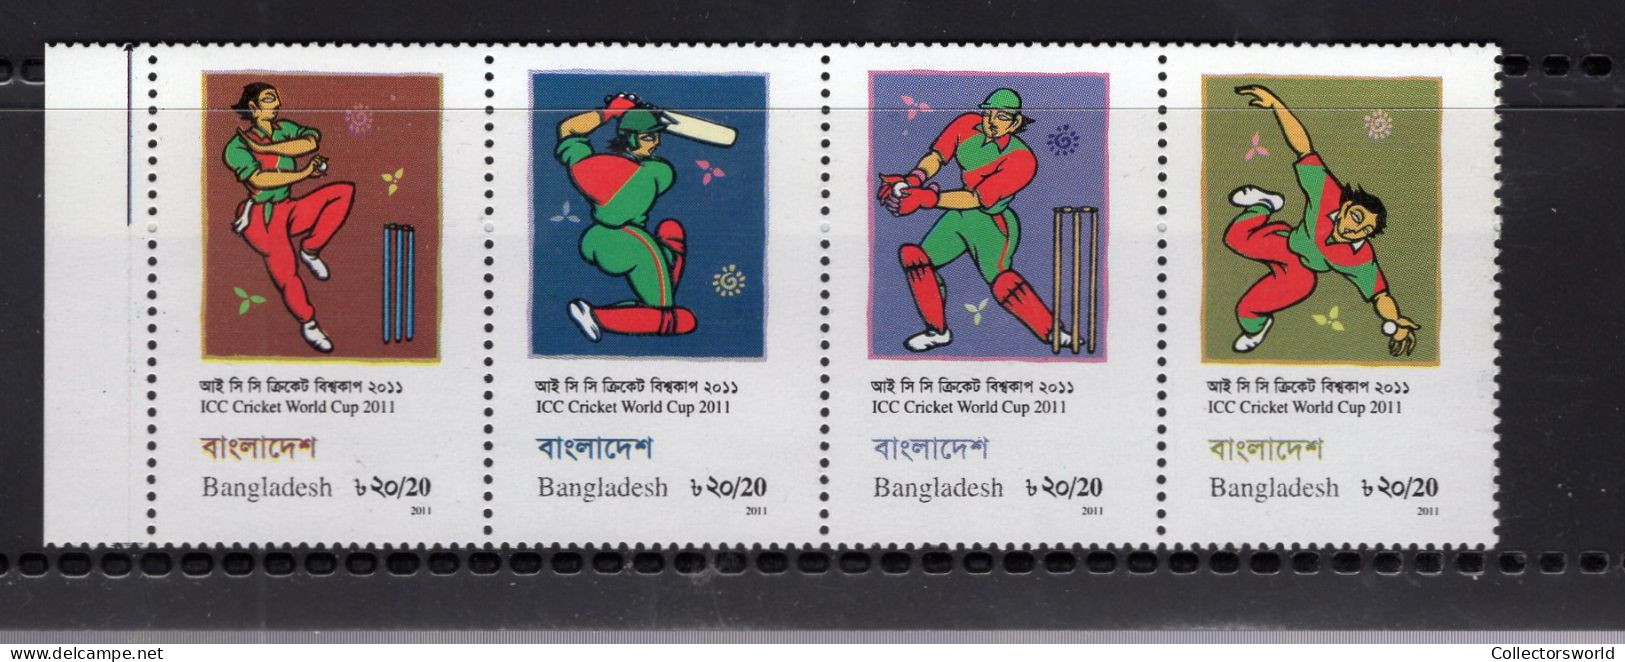 Bangladesh Serie 4v 2011 ICC Cricket World Cup MNH - Cricket